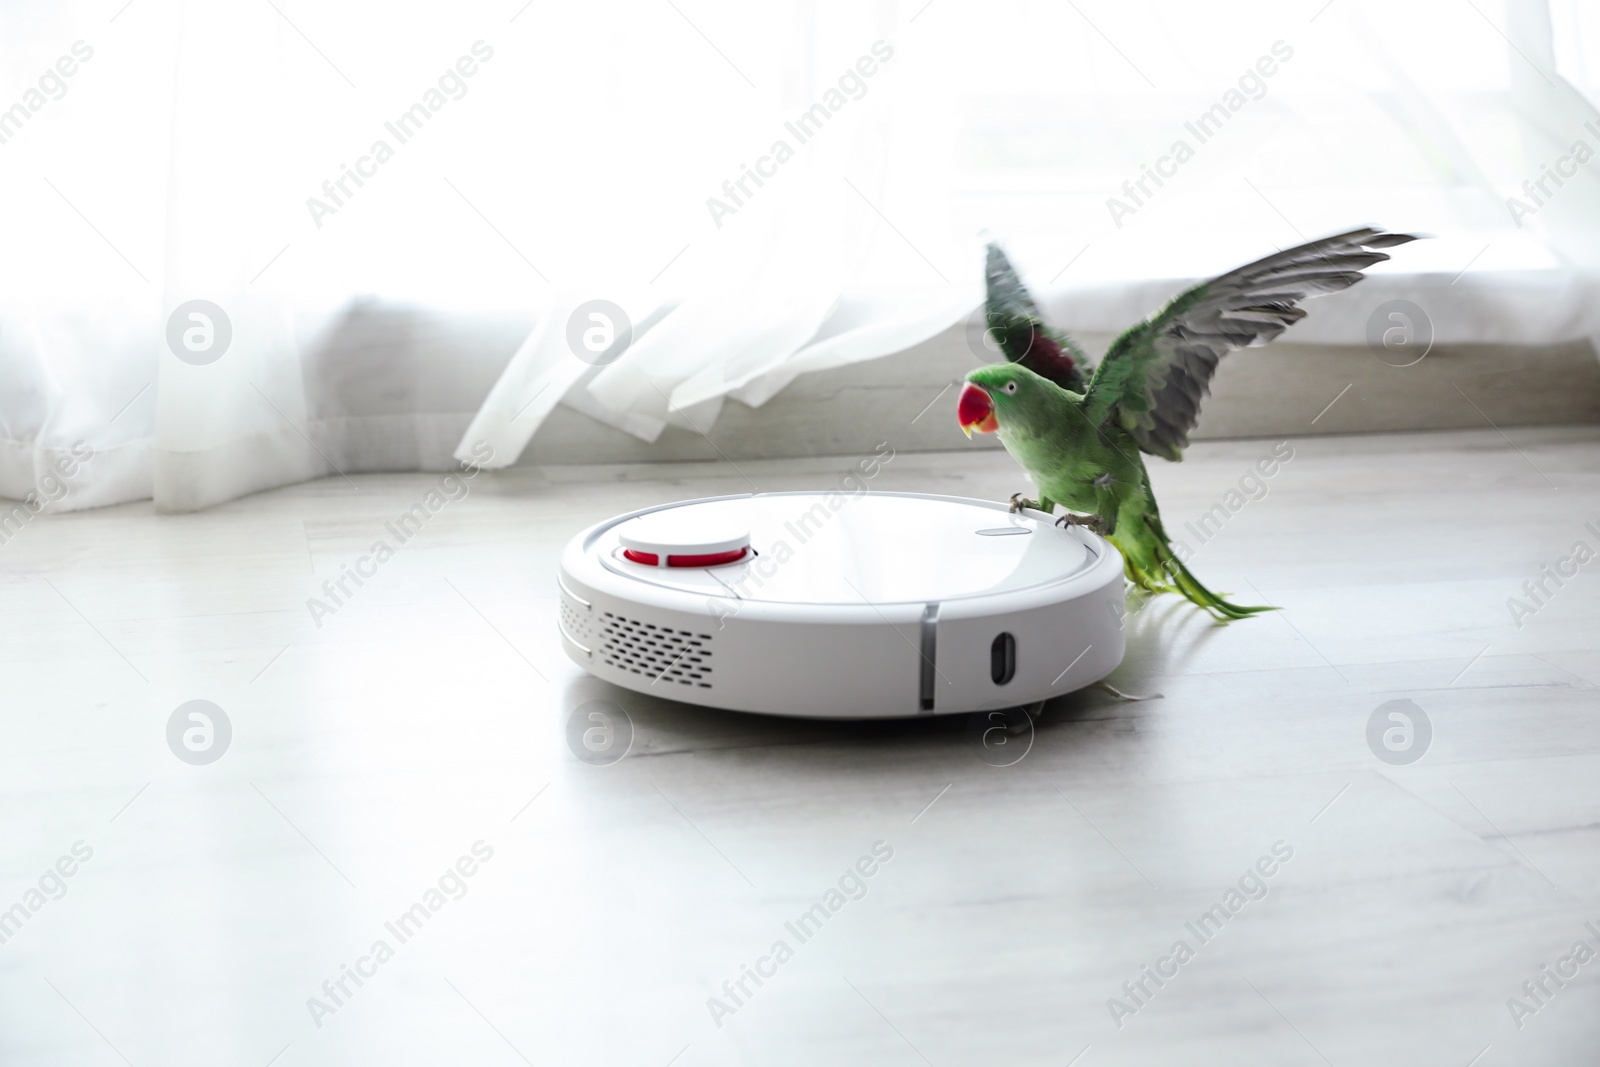 Photo of Modern robotic vacuum cleaner and Alexandrine parakeet on floor indoors